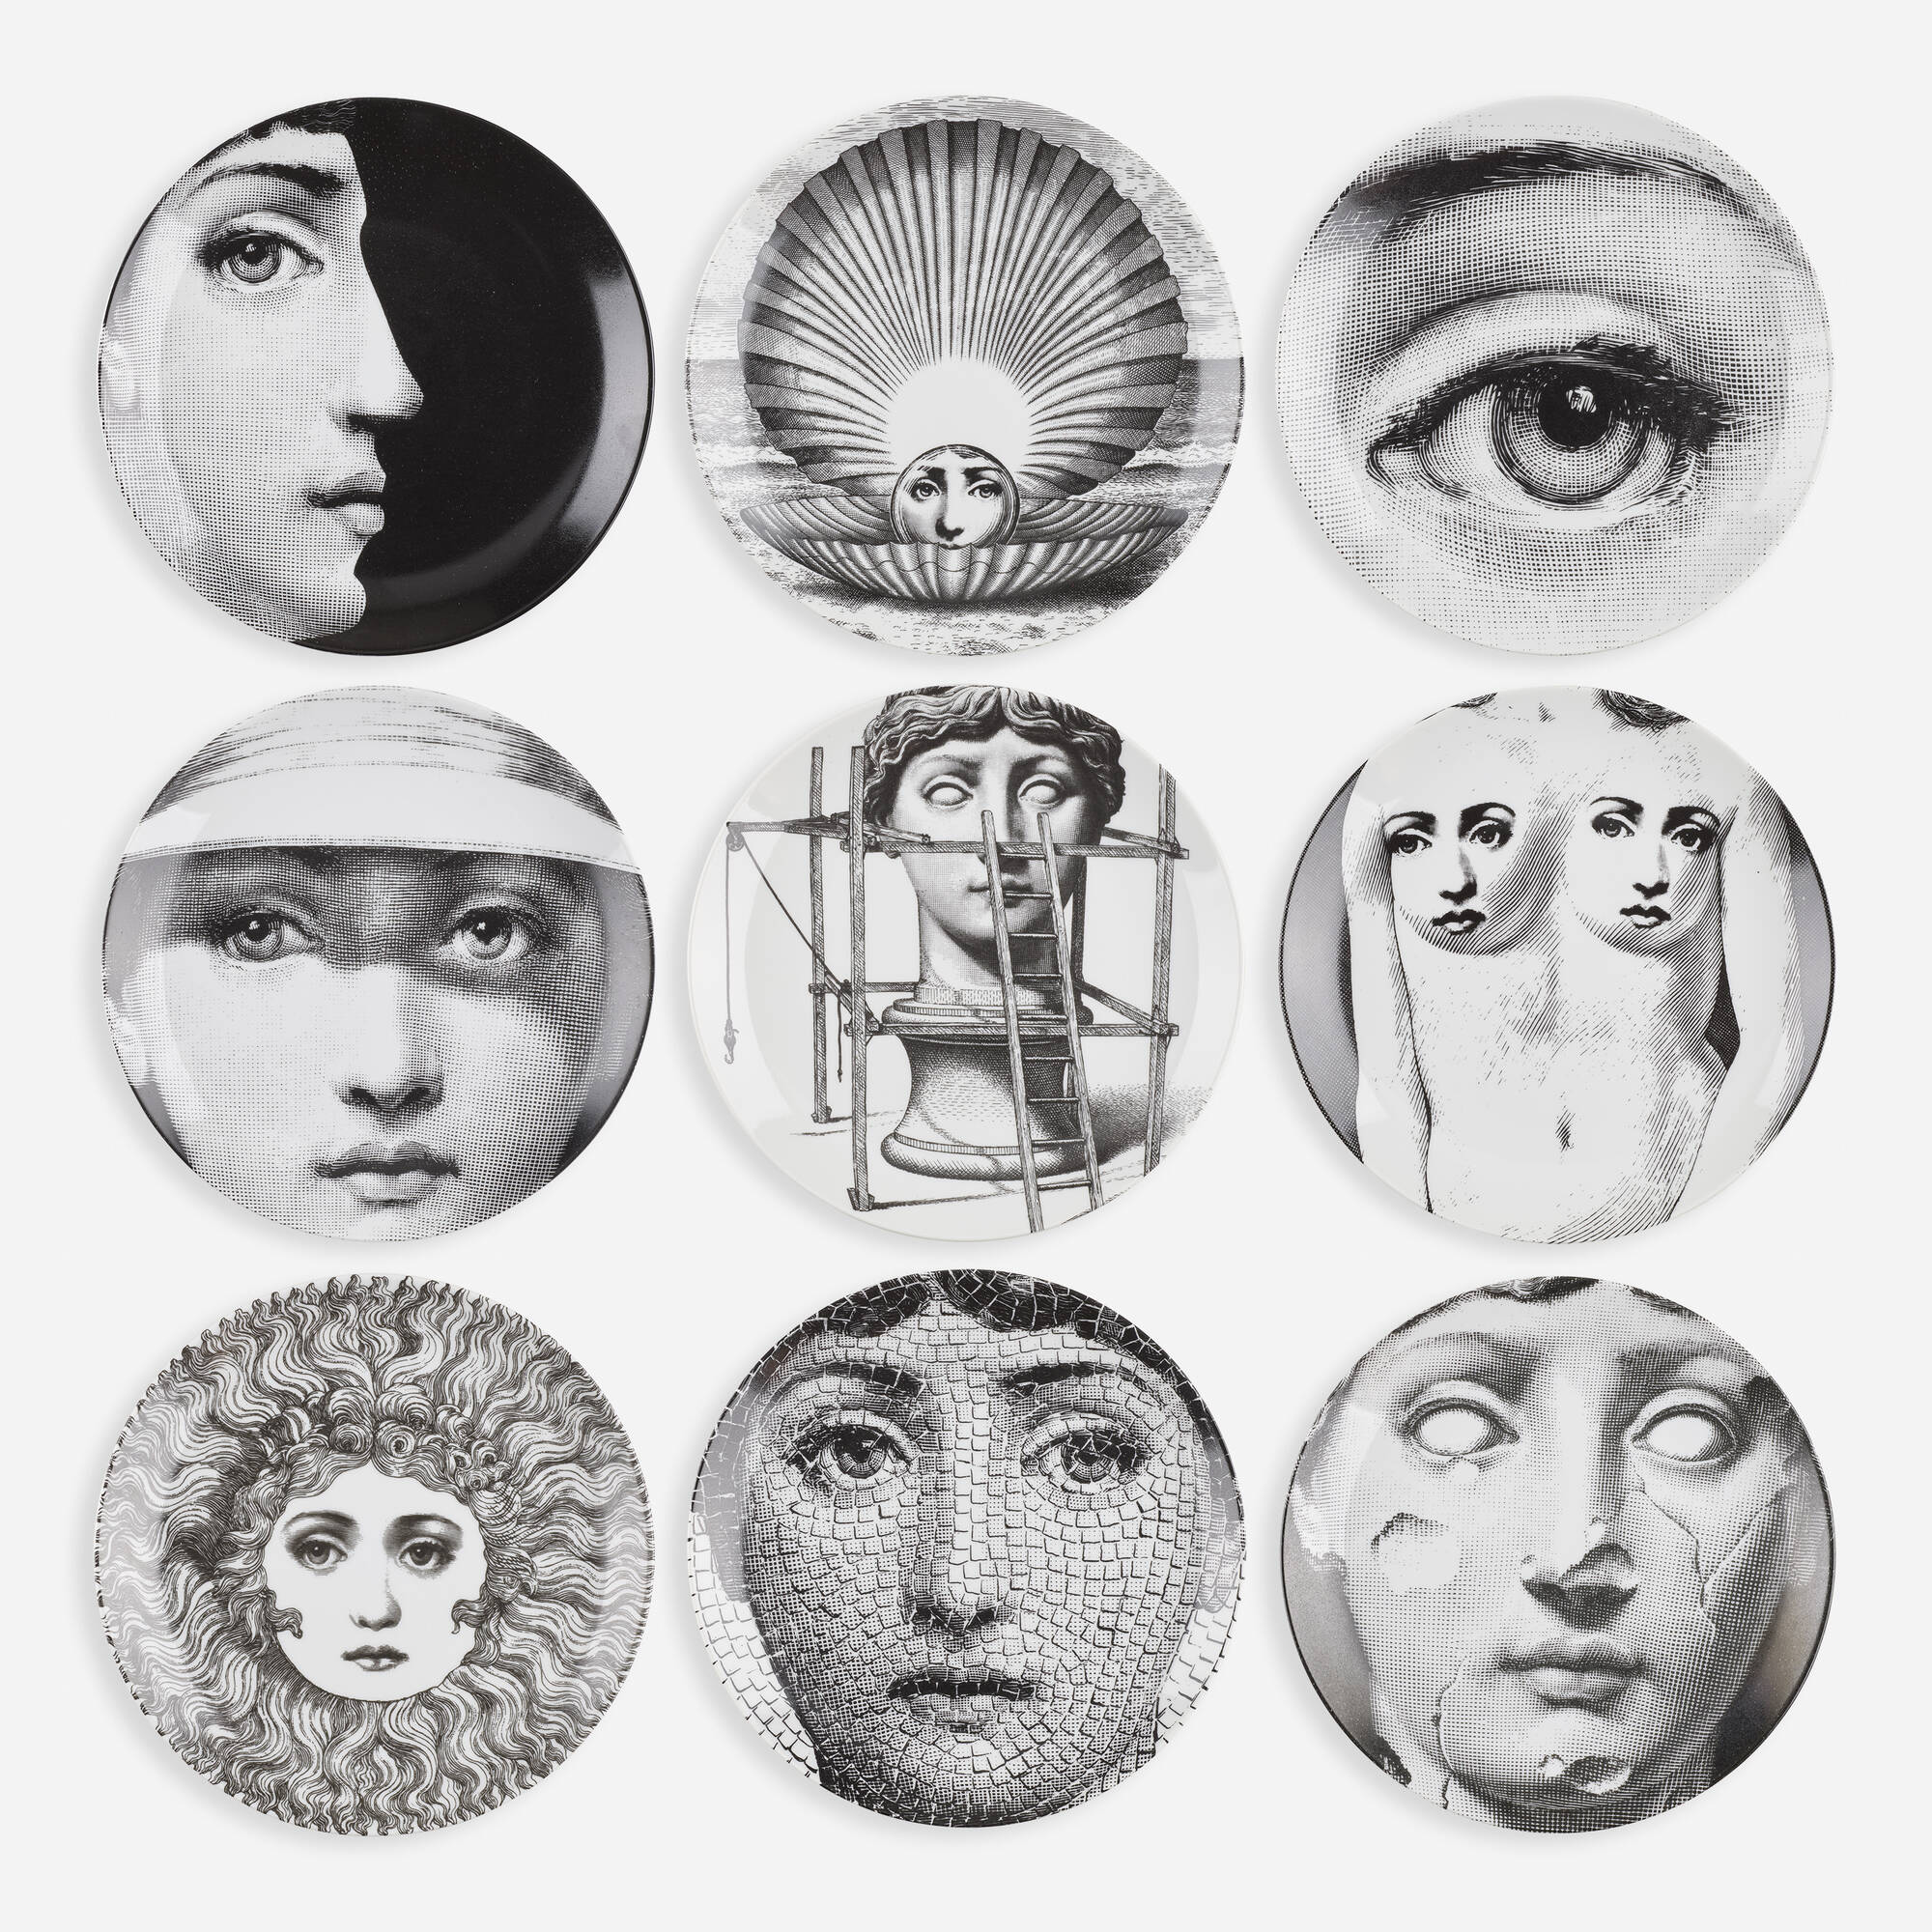 201: PIERO FORNASETTI, Tema e Variazioni plates, collection of twenty-four  < Modern Design, 13 May 2020 < Auctions